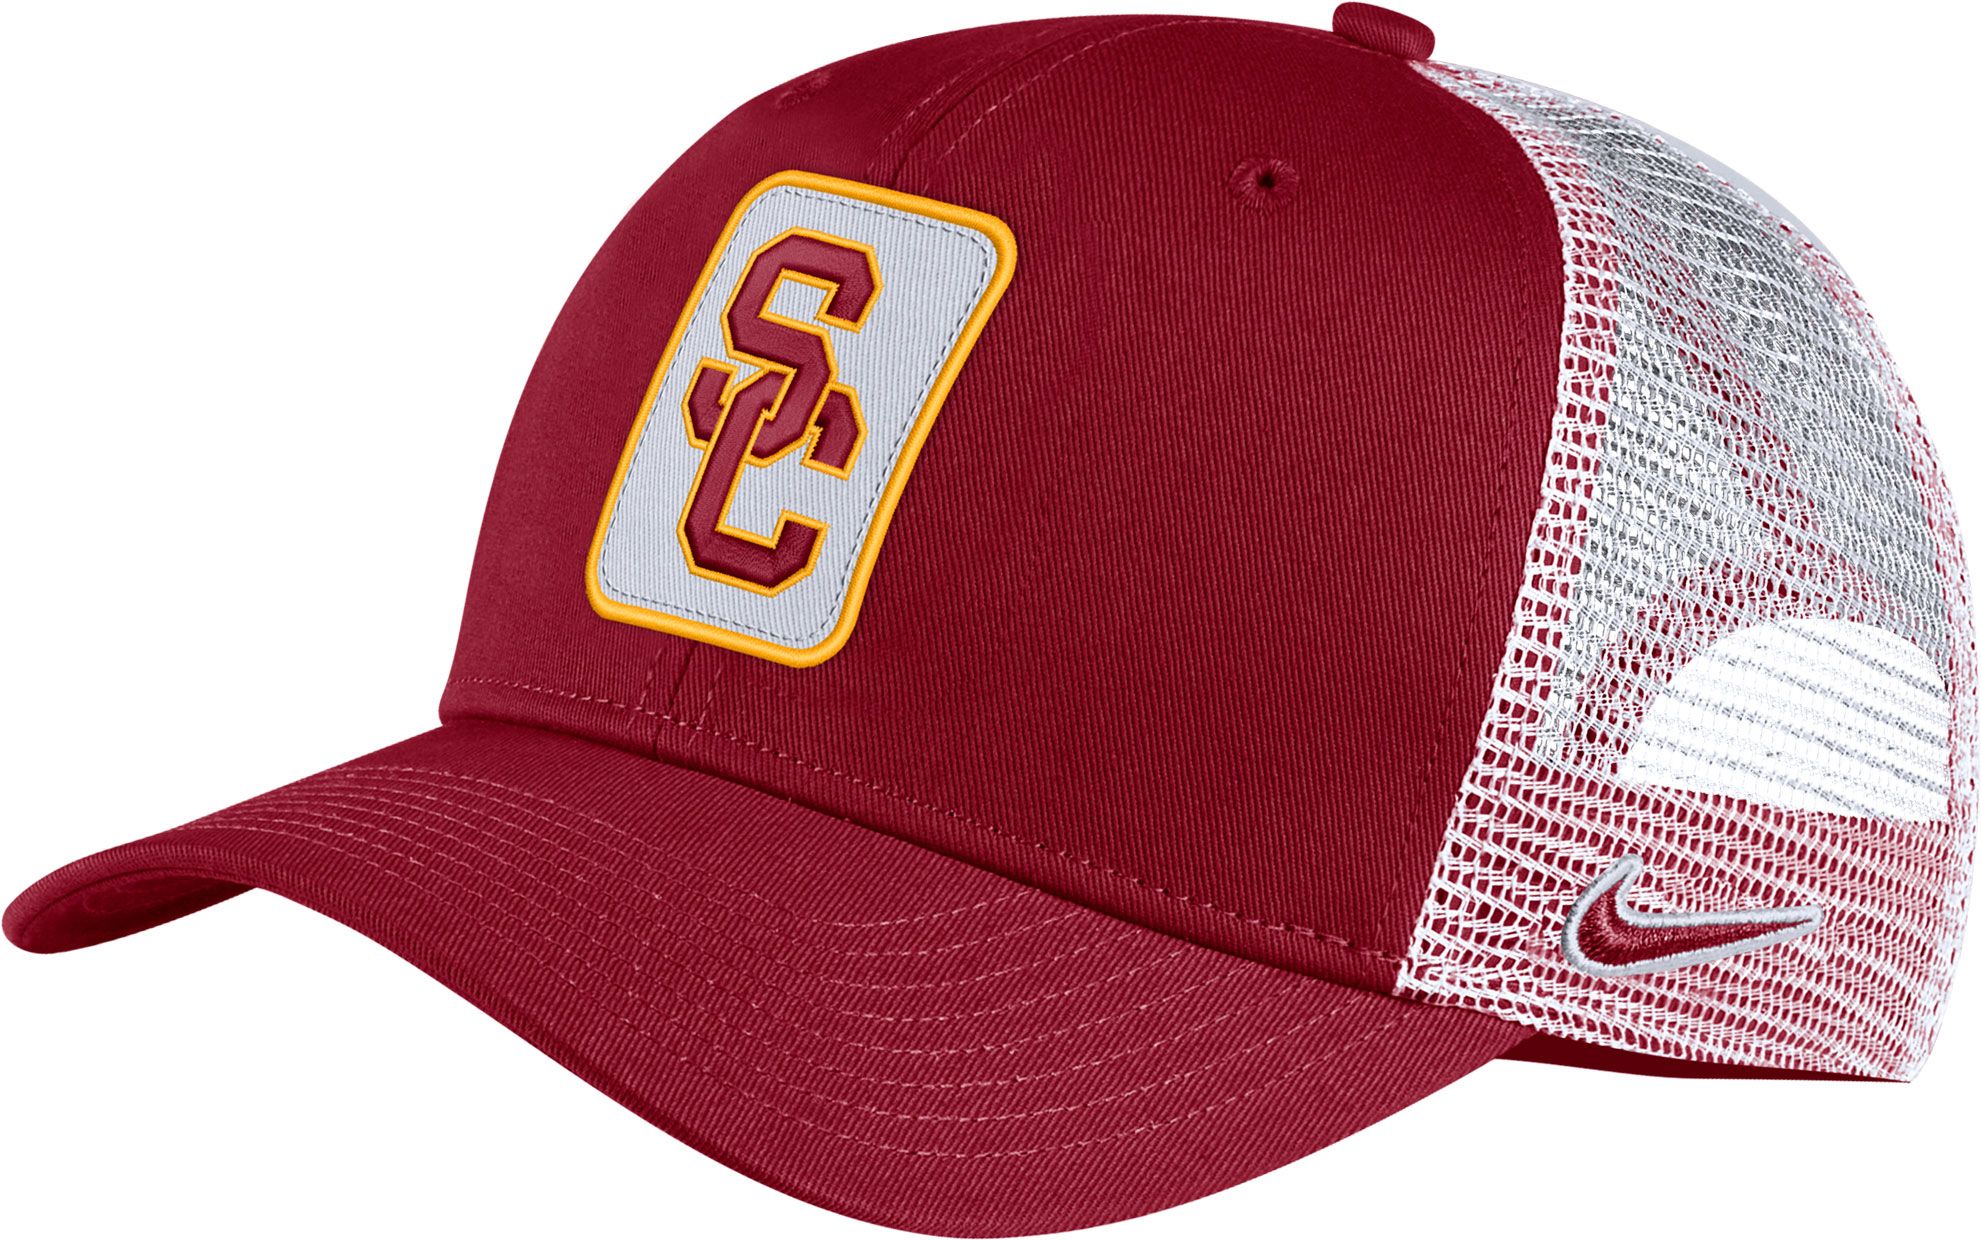 USC Trojans Hats | Best Price Guarantee at DICK'S